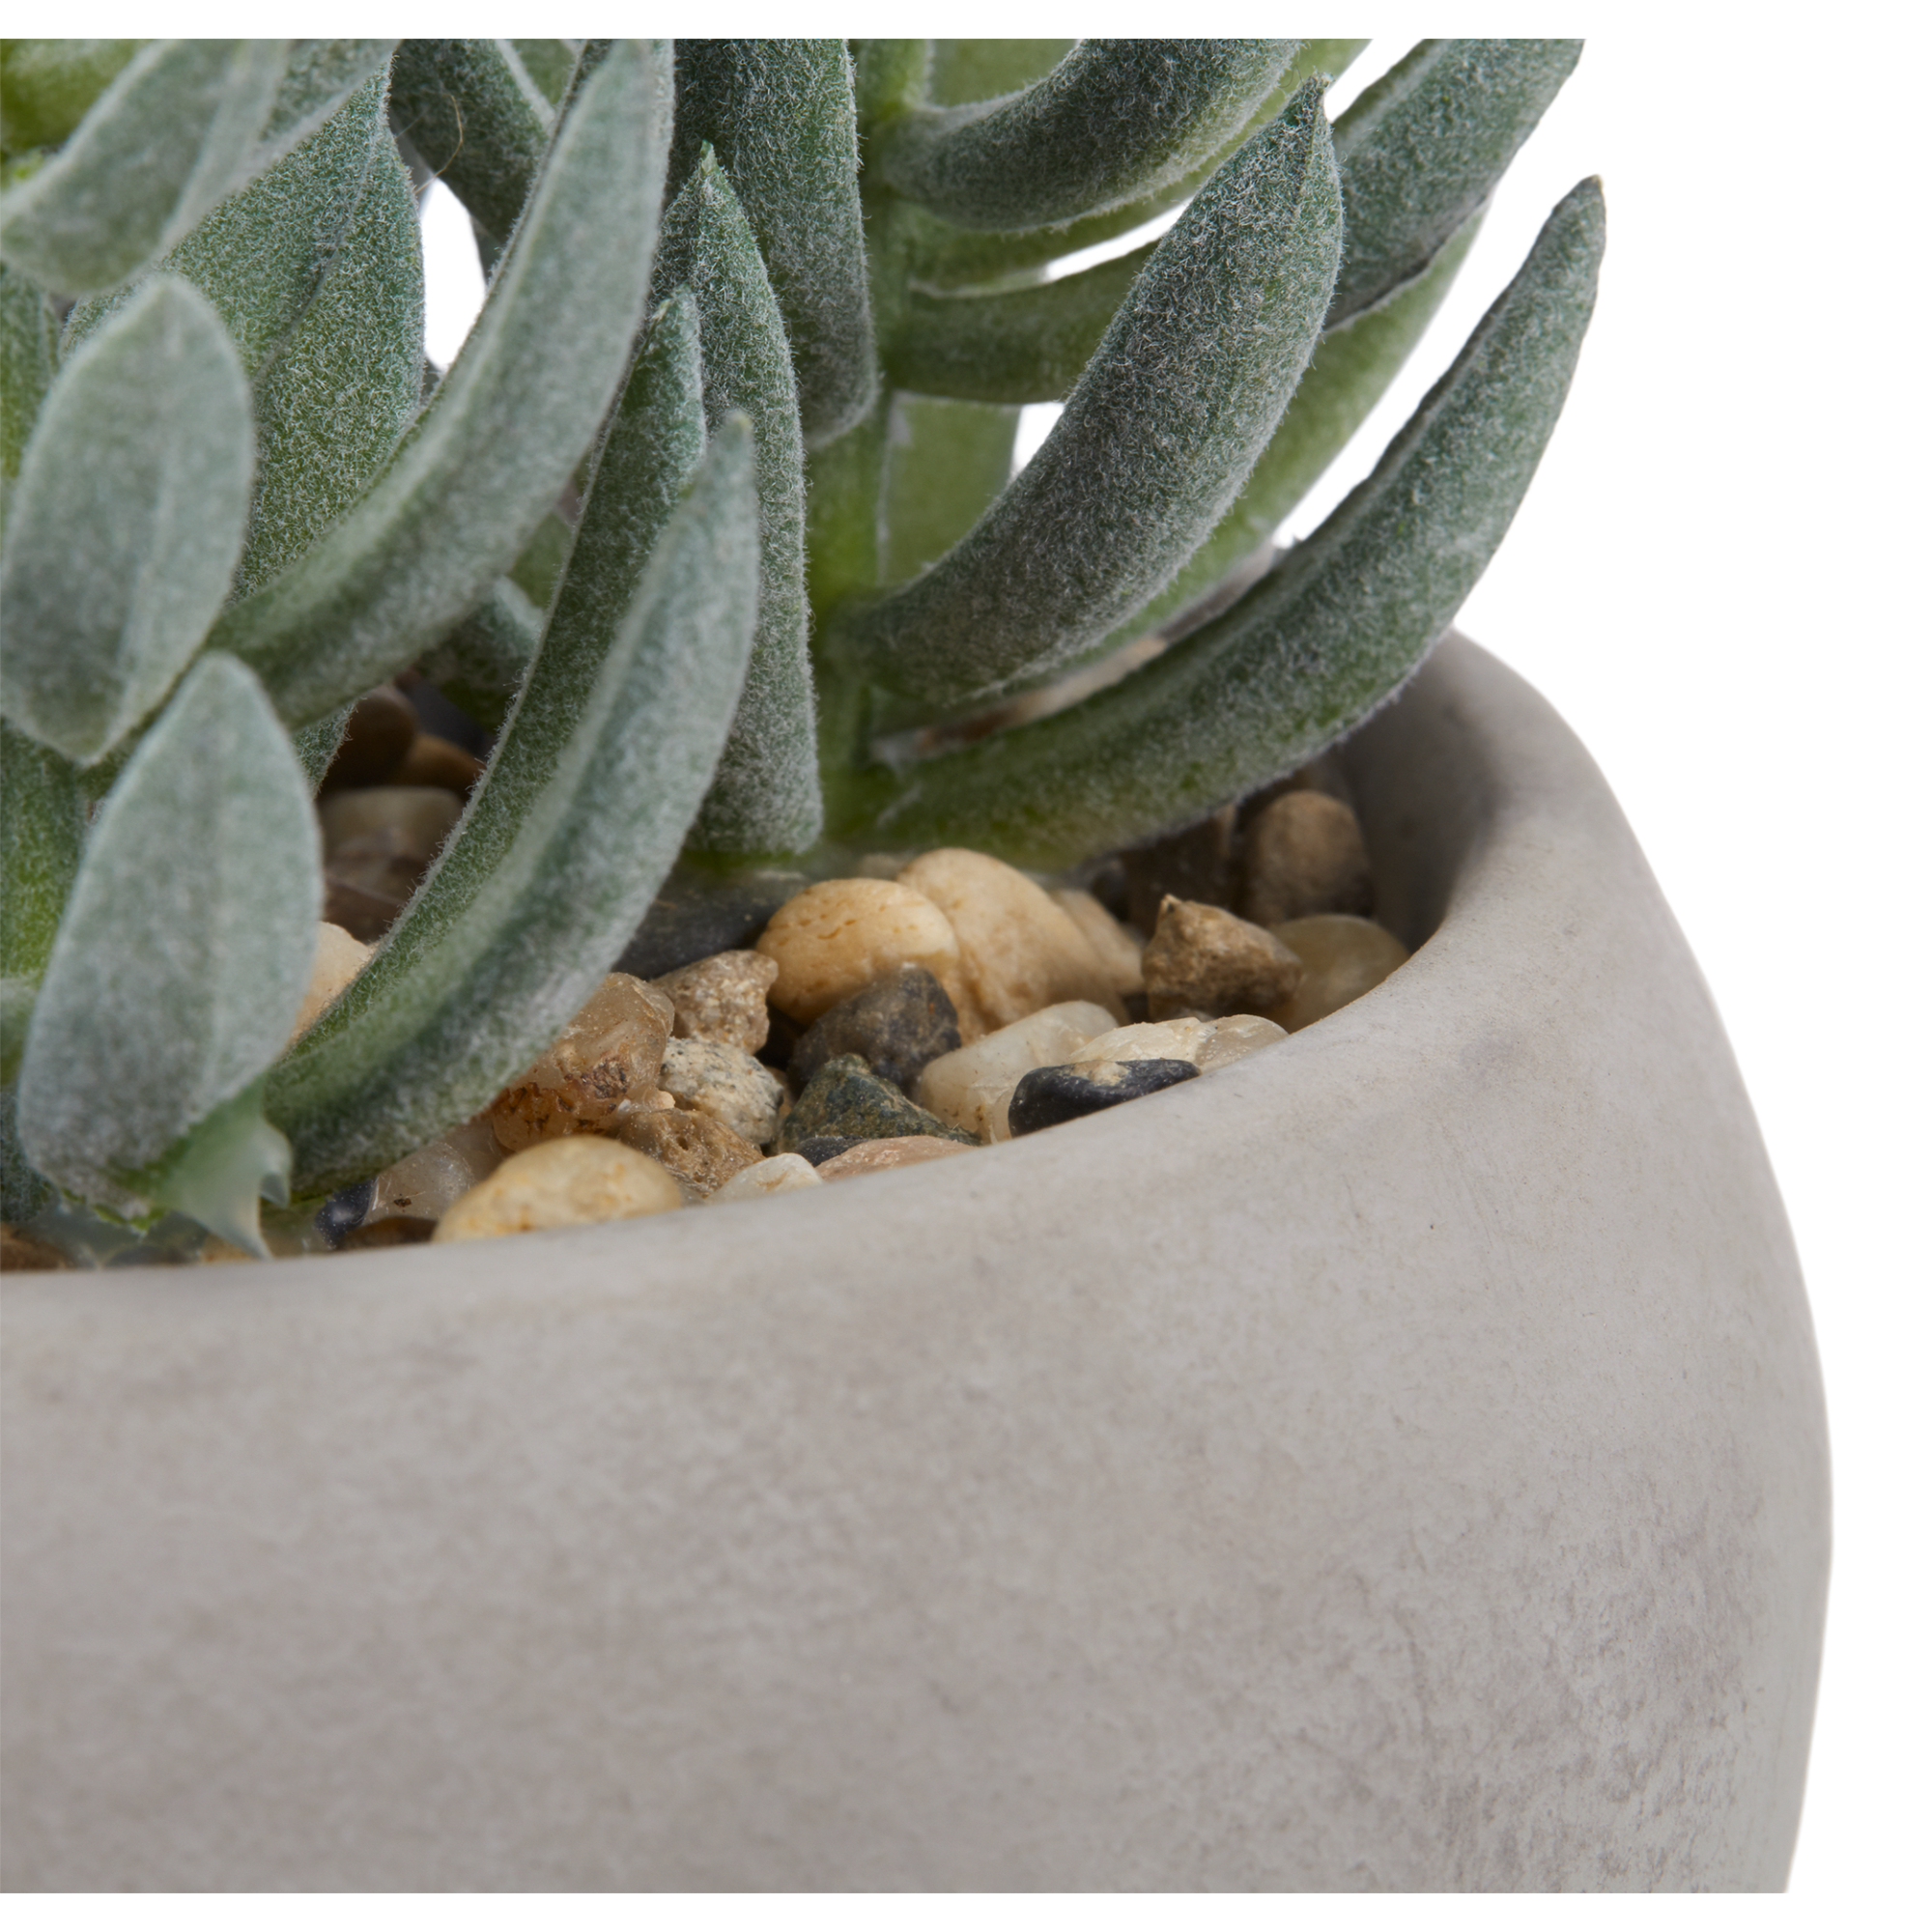 Artificial Succulent in Grey Pot